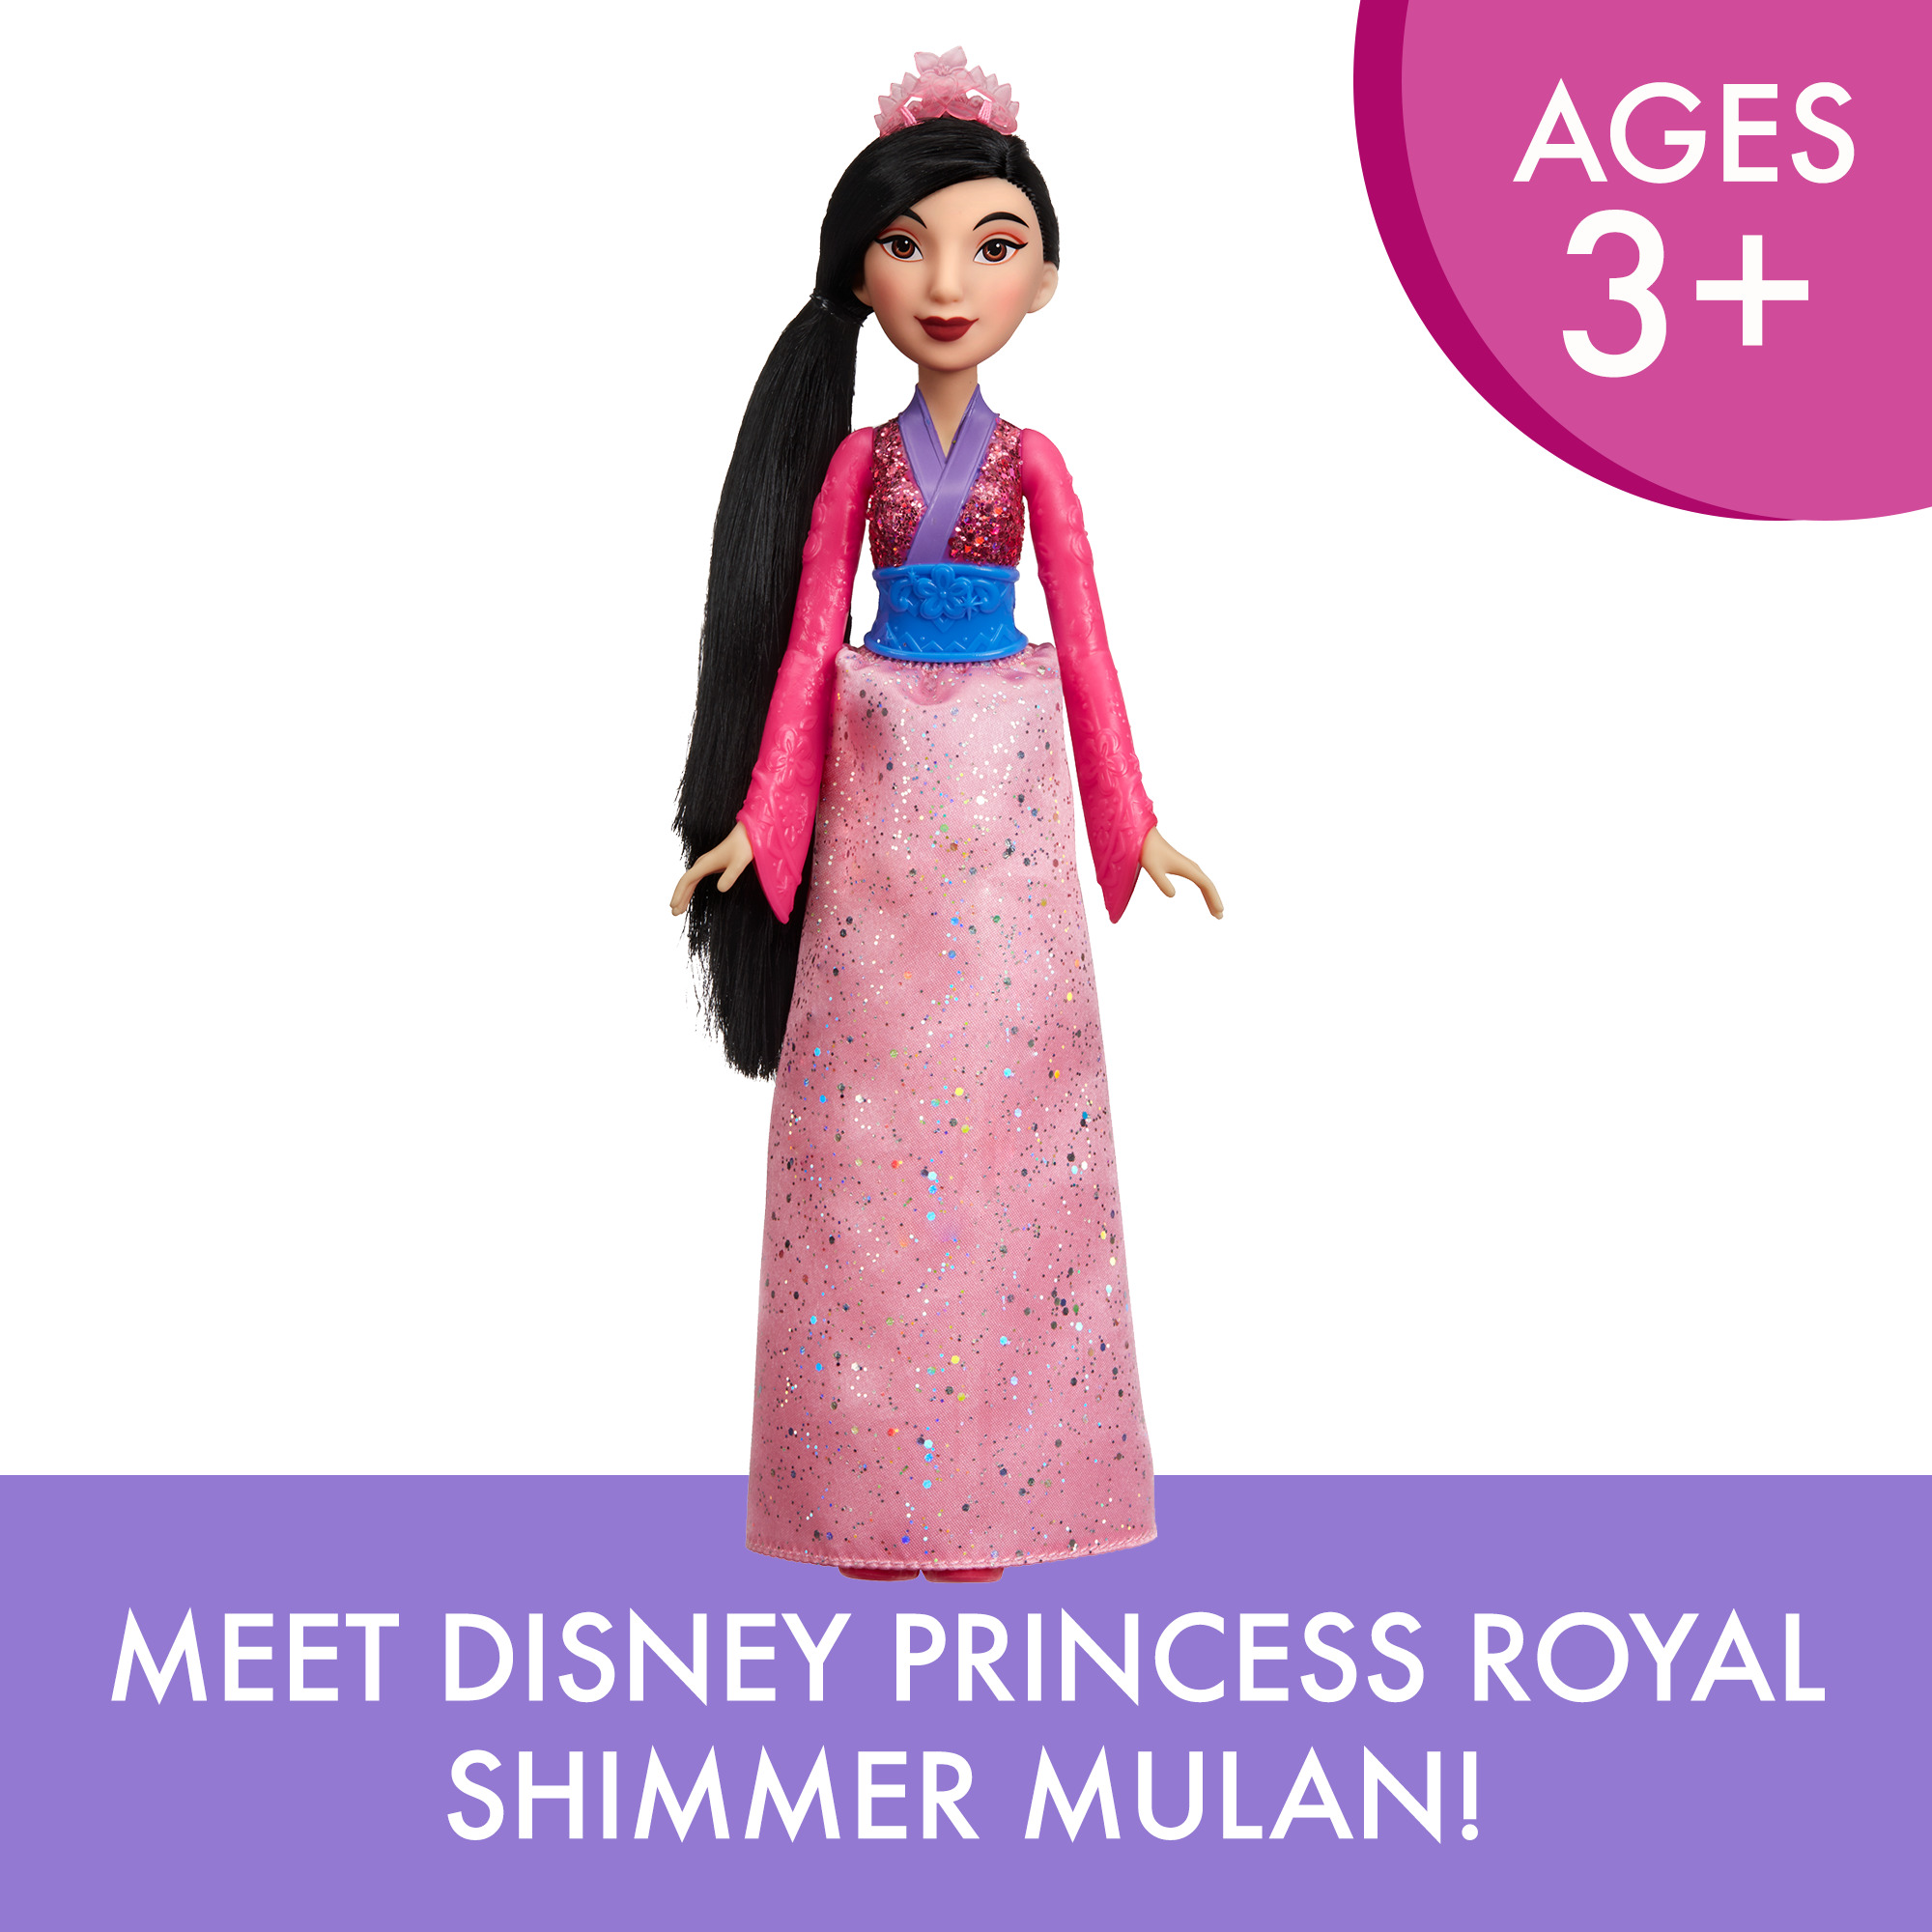 Disney Princess Royal Shimmer Mulan, with Sparkly Skirt, Tiara, Shoes, Ages 3+ - image 5 of 8